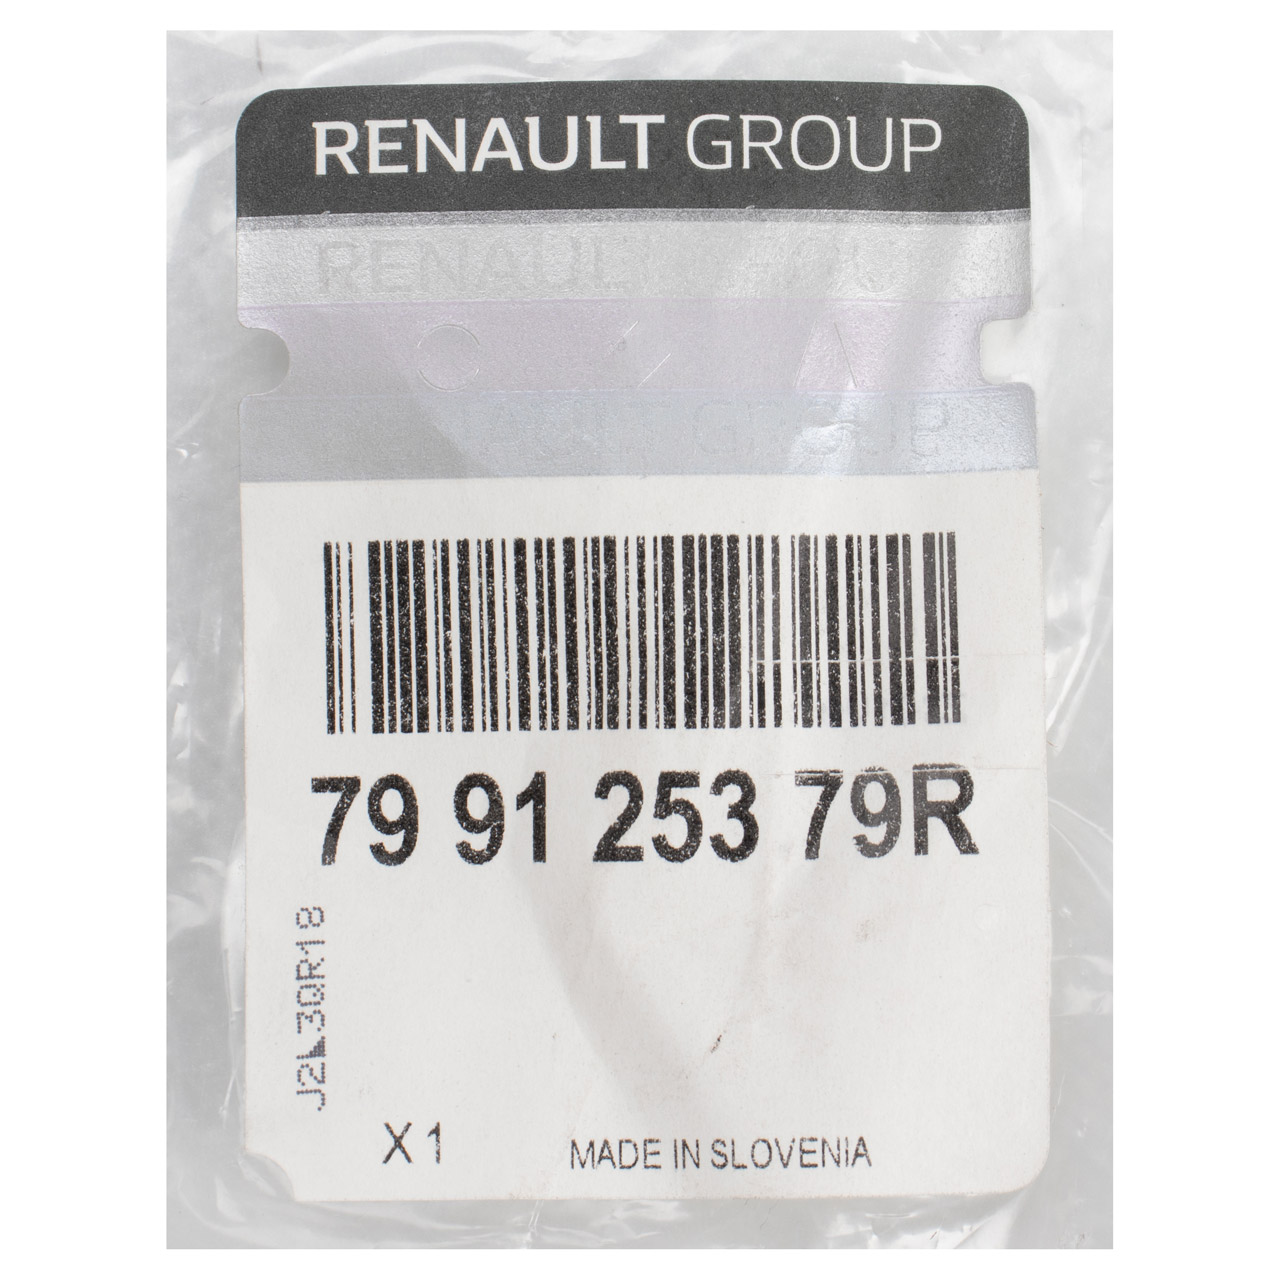 ORIGINAL Renault Befestigung Hutablage Twingo 3 hinten links 799125379R